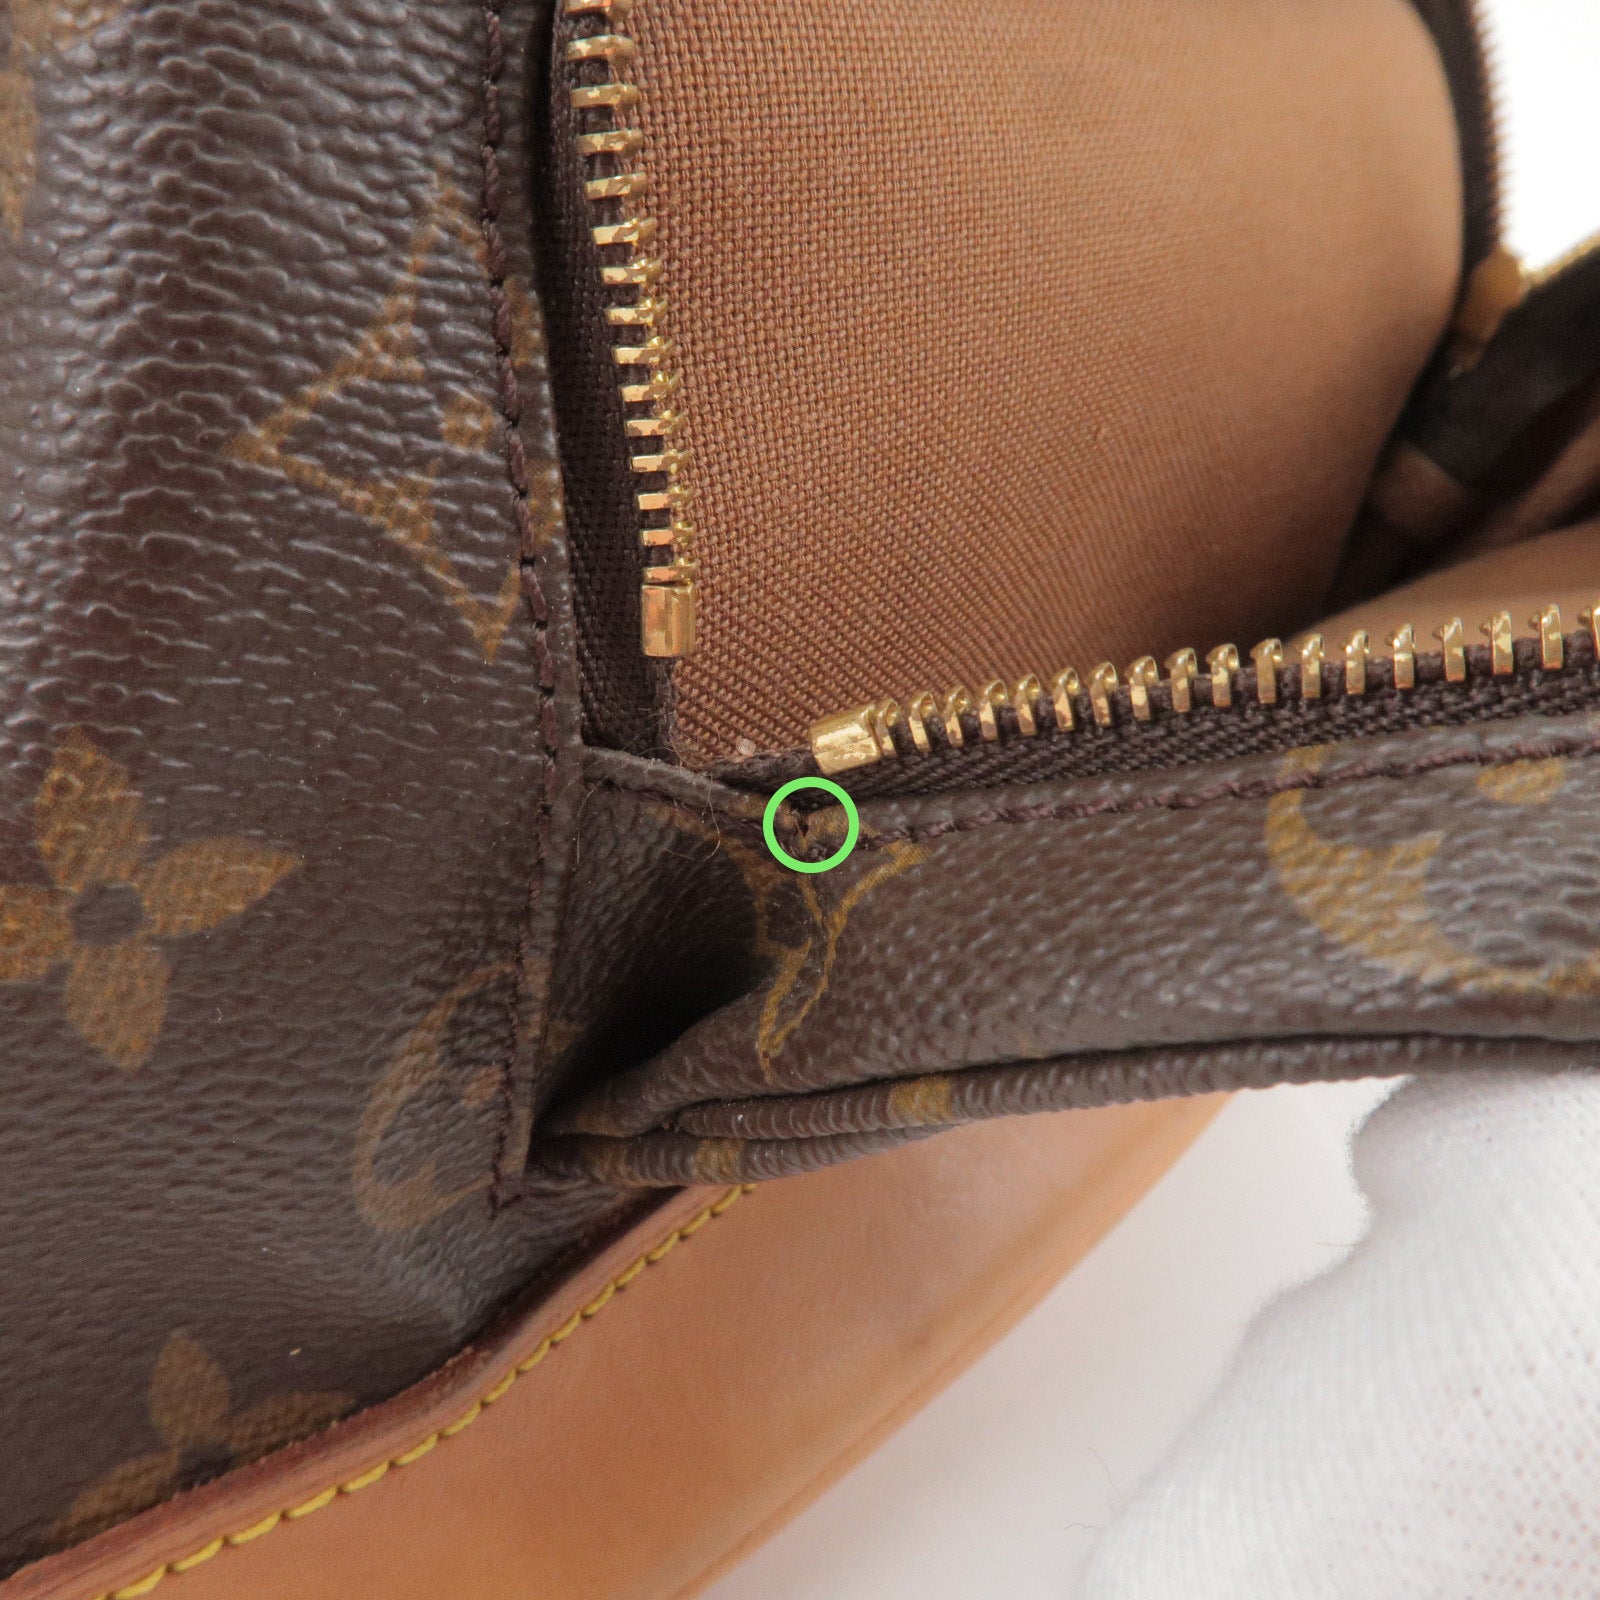 MM - Louis - Bag - Pack - M51136 – dct - Vuitton - Monogram - ep_vintage  luxury Store - Montsouris - frankie collective reworked louis vuitton gucci  necklace - Back